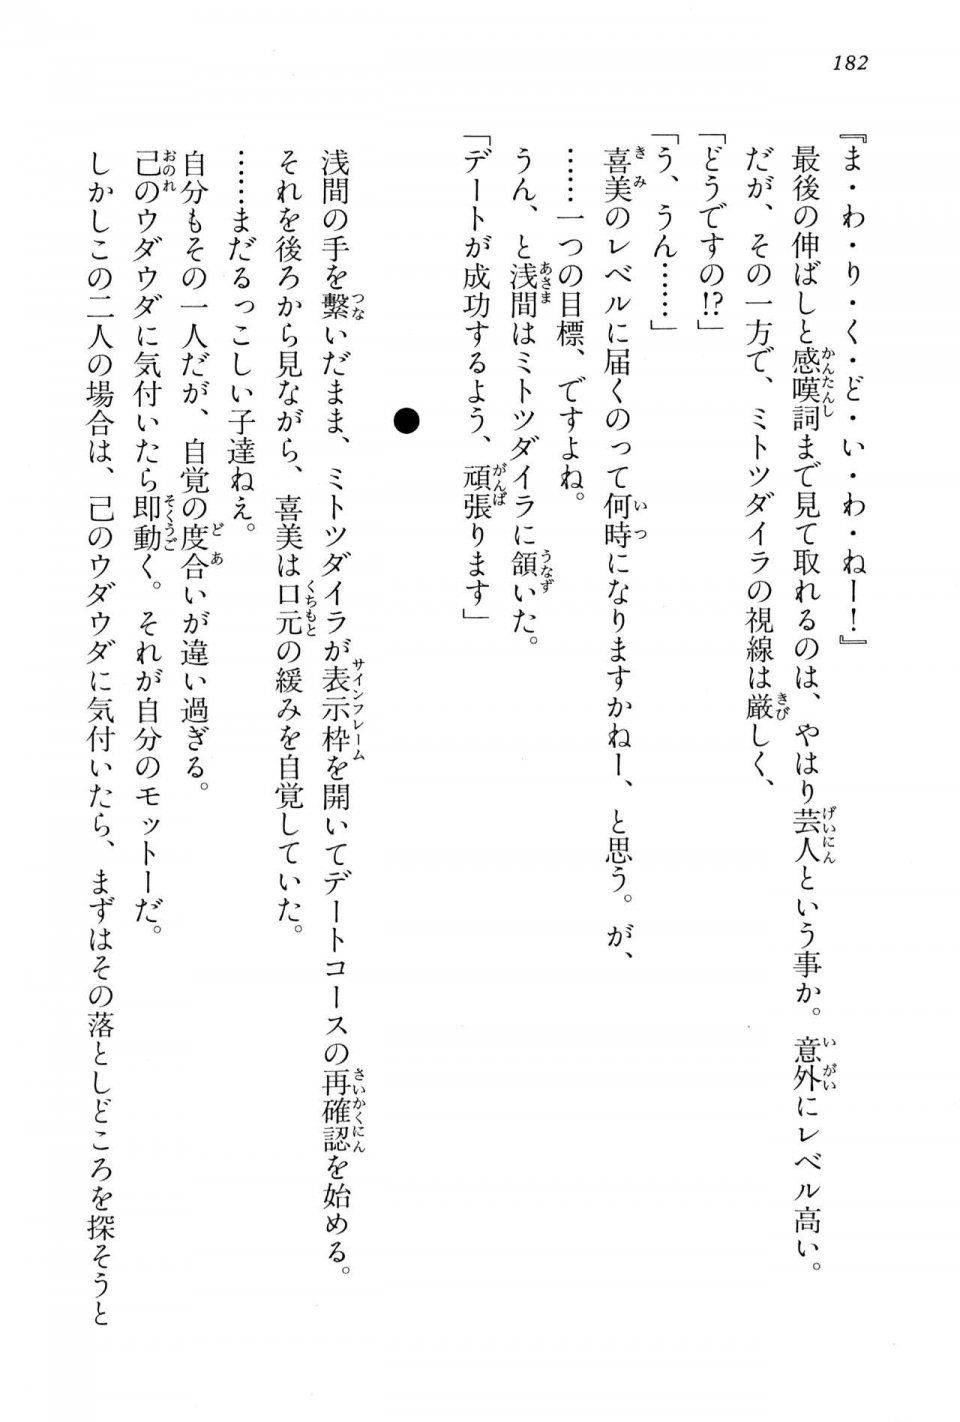 Kyoukai Senjou no Horizon BD Special Mininovel Vol 2(1B) - Photo #186